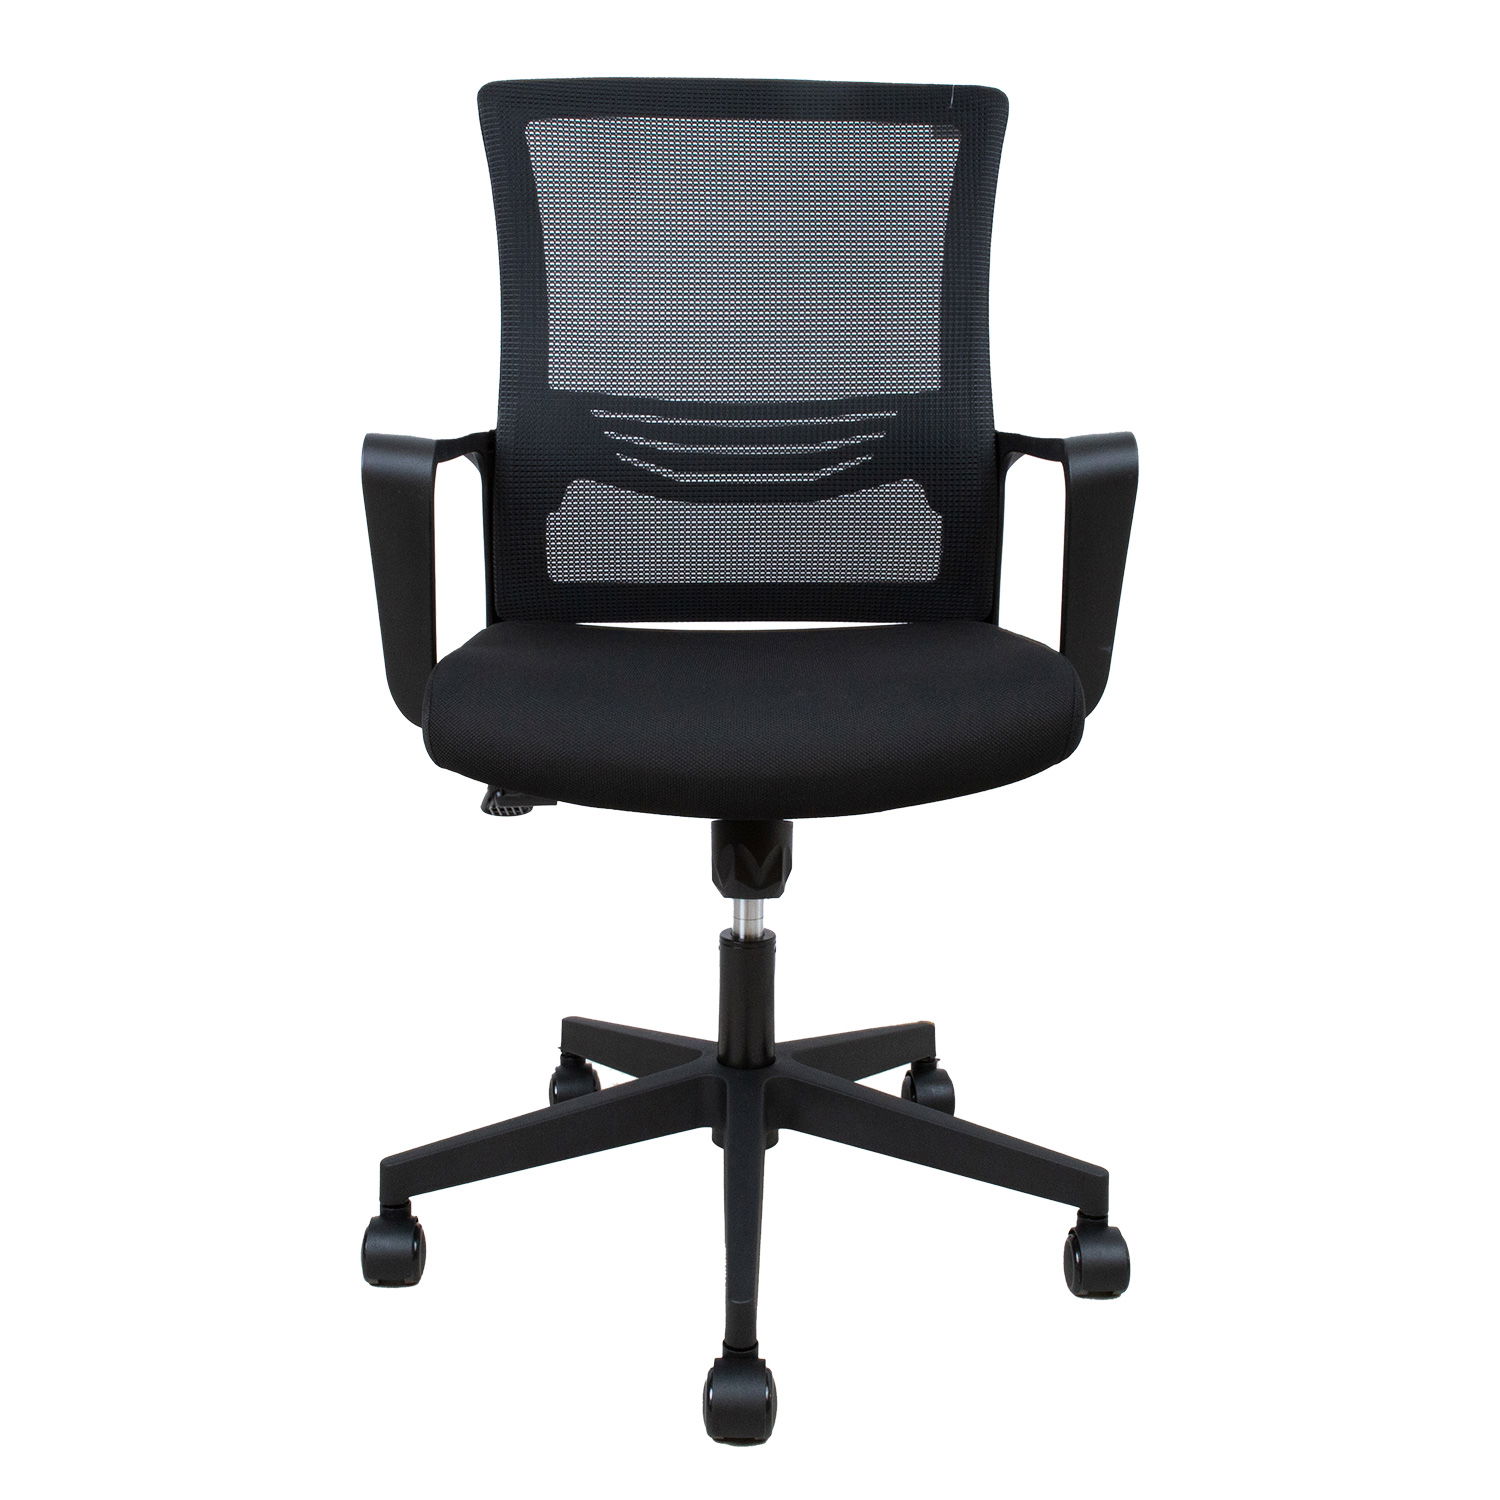 Biuro kėdė EMMA, 57x65x98-104 cm, juoda - 2